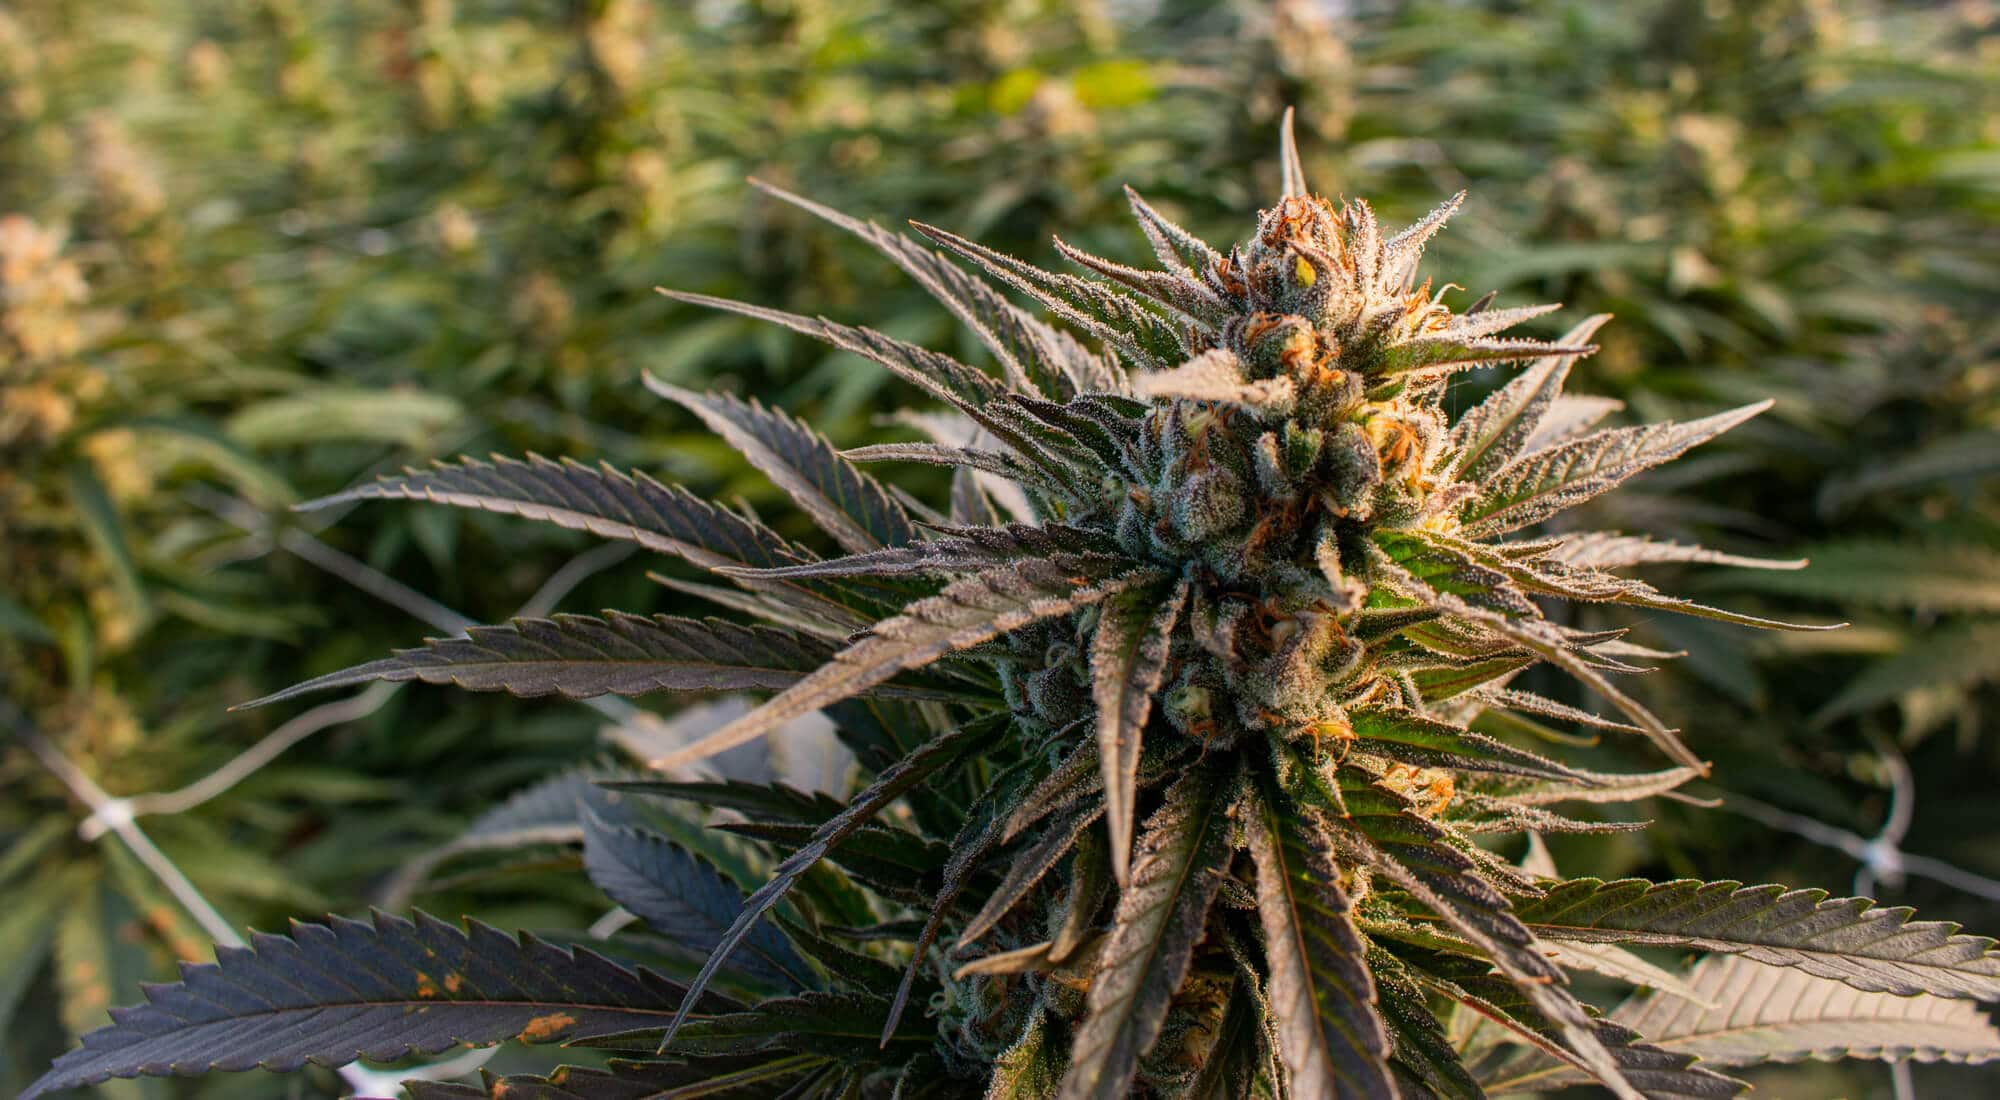 Arizona recreational cannabis regulation drafts have been released